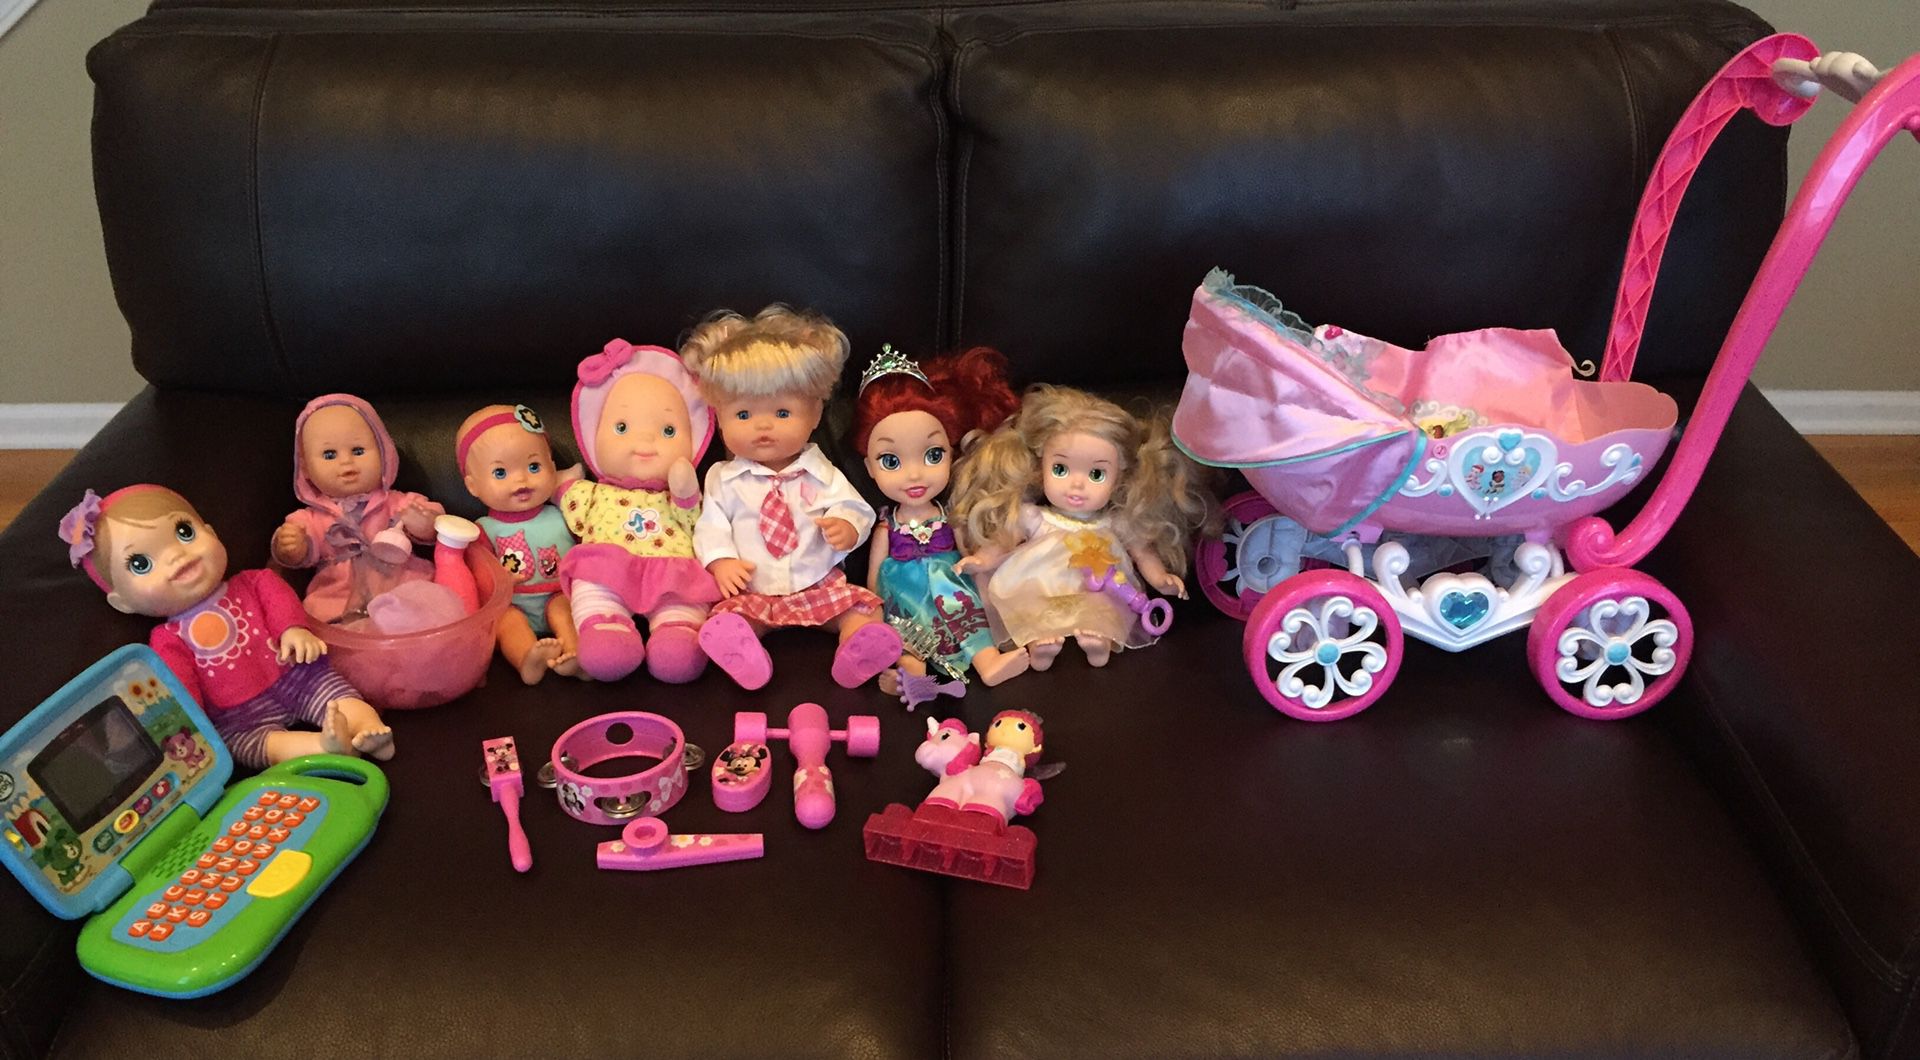 Disney princess dolls and more toys